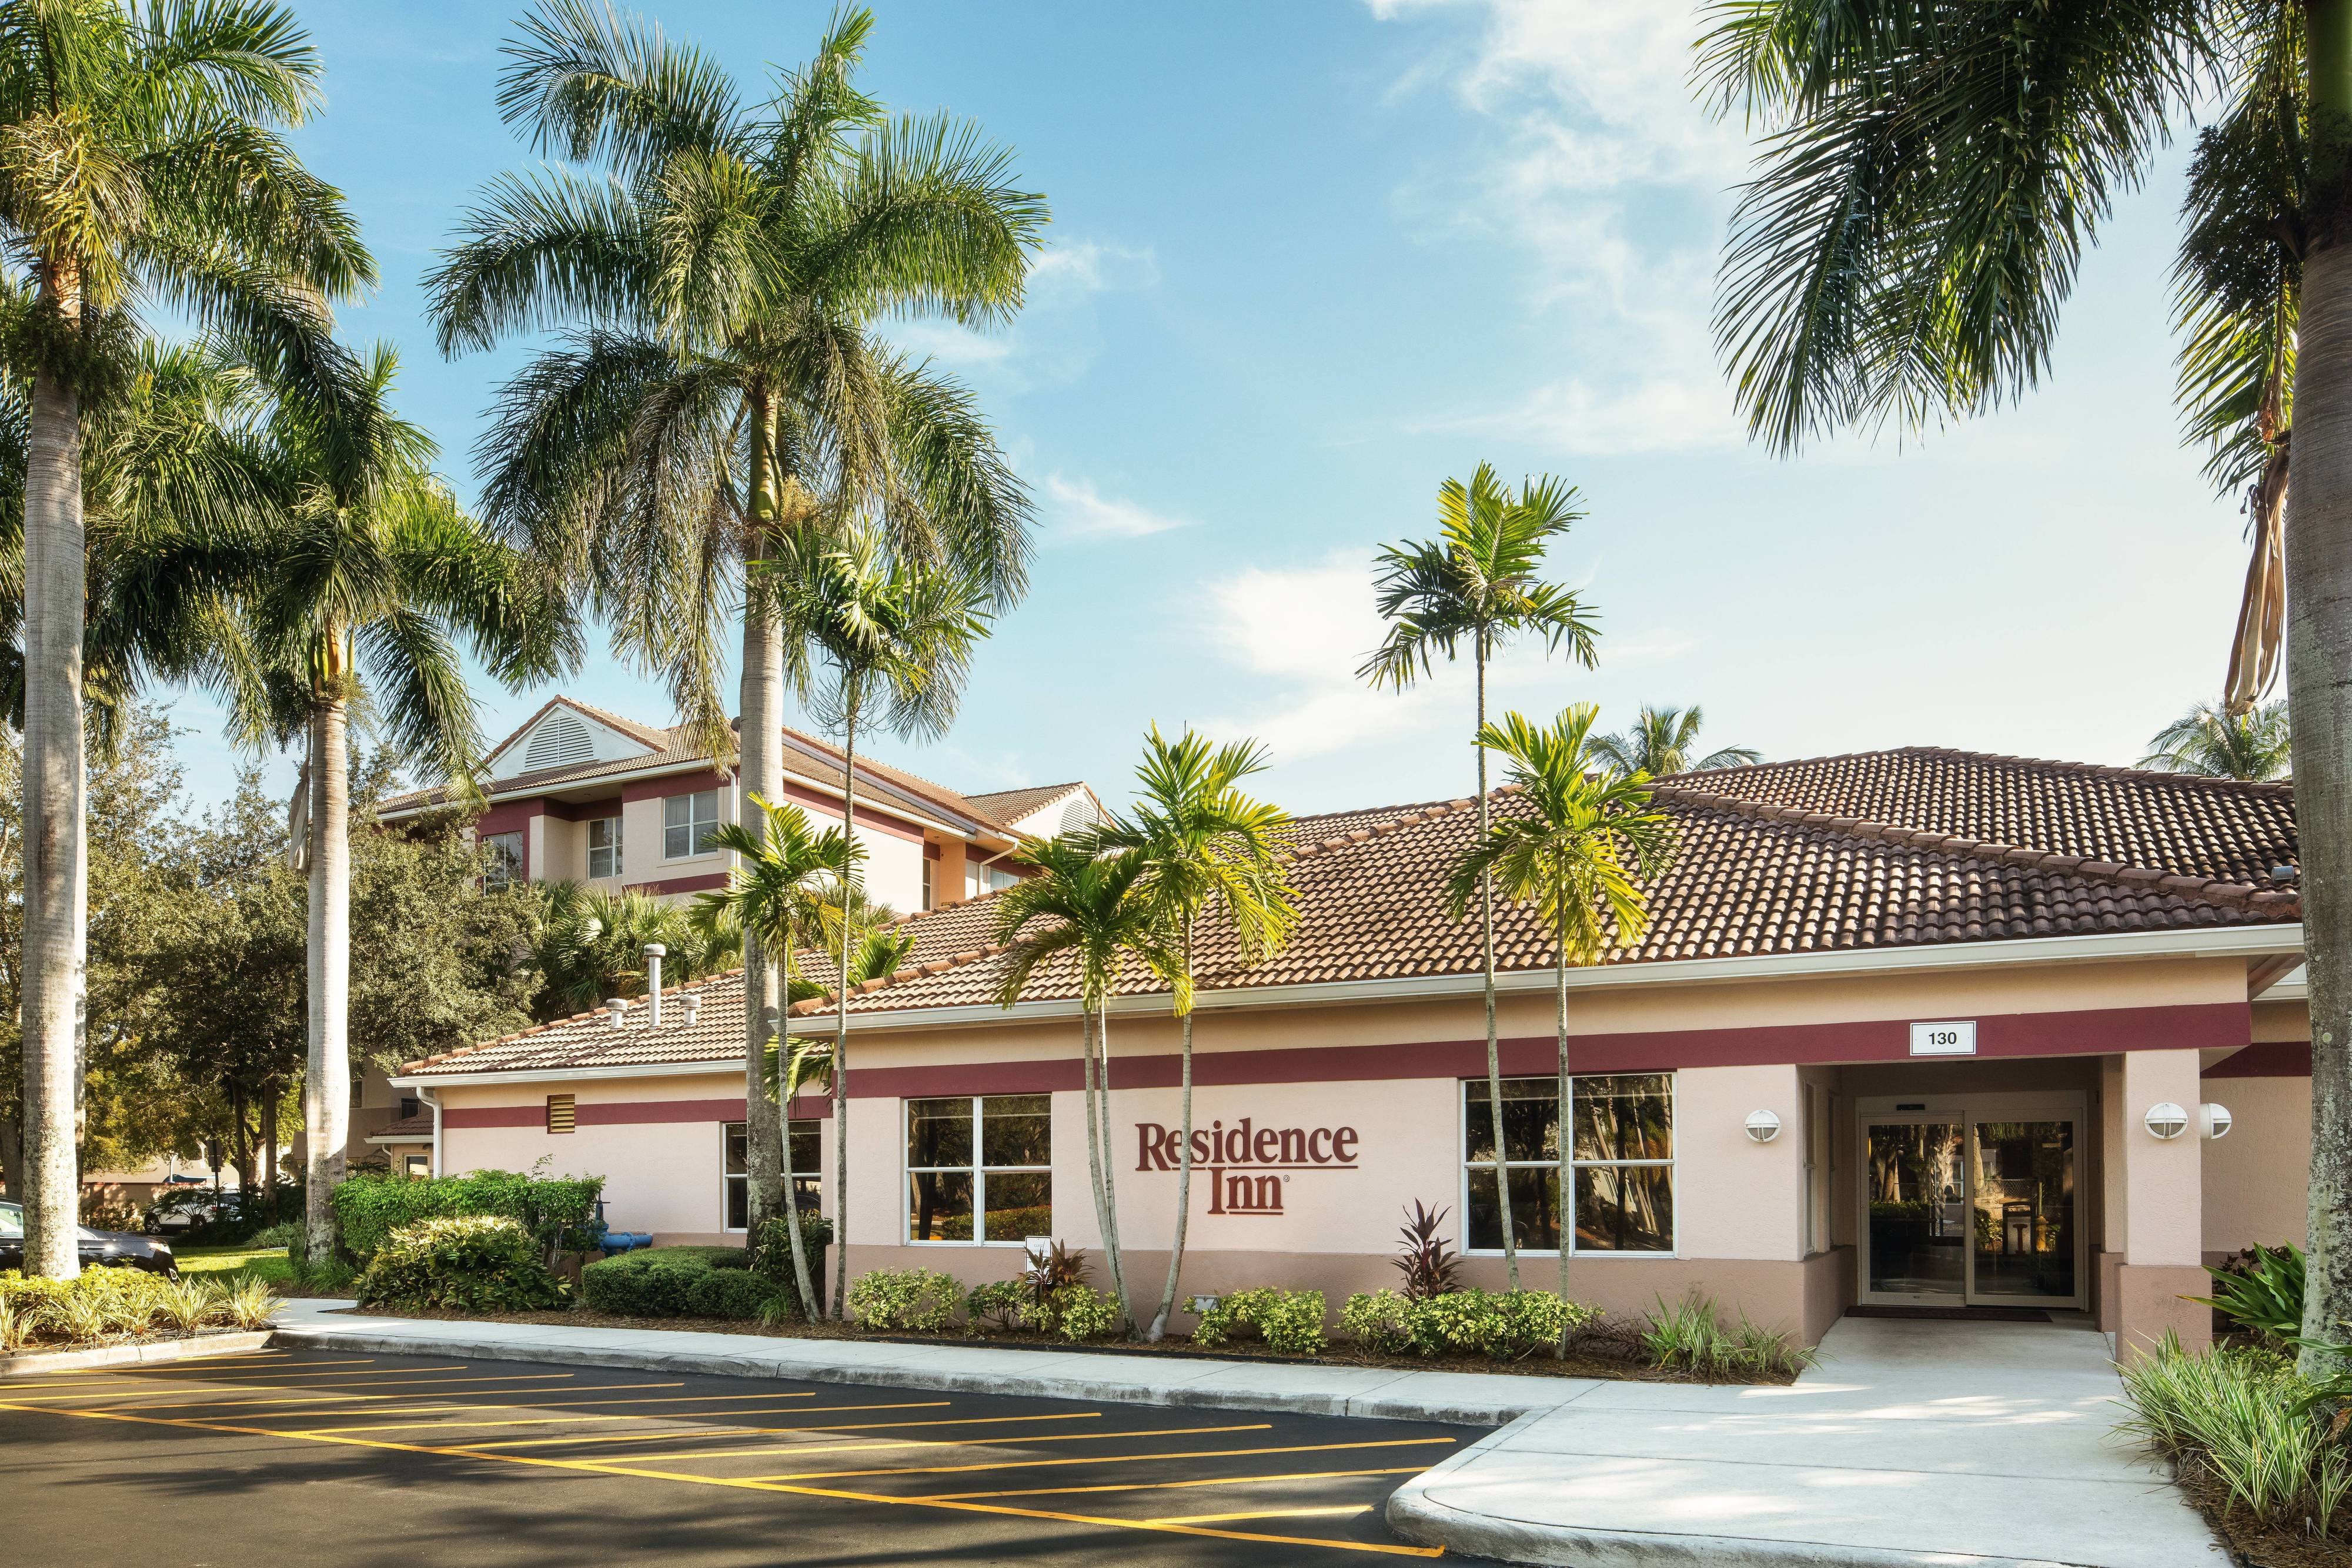 Residence Inn Ft Lauderdale/Plantation- Plantation, FL Hotels- First